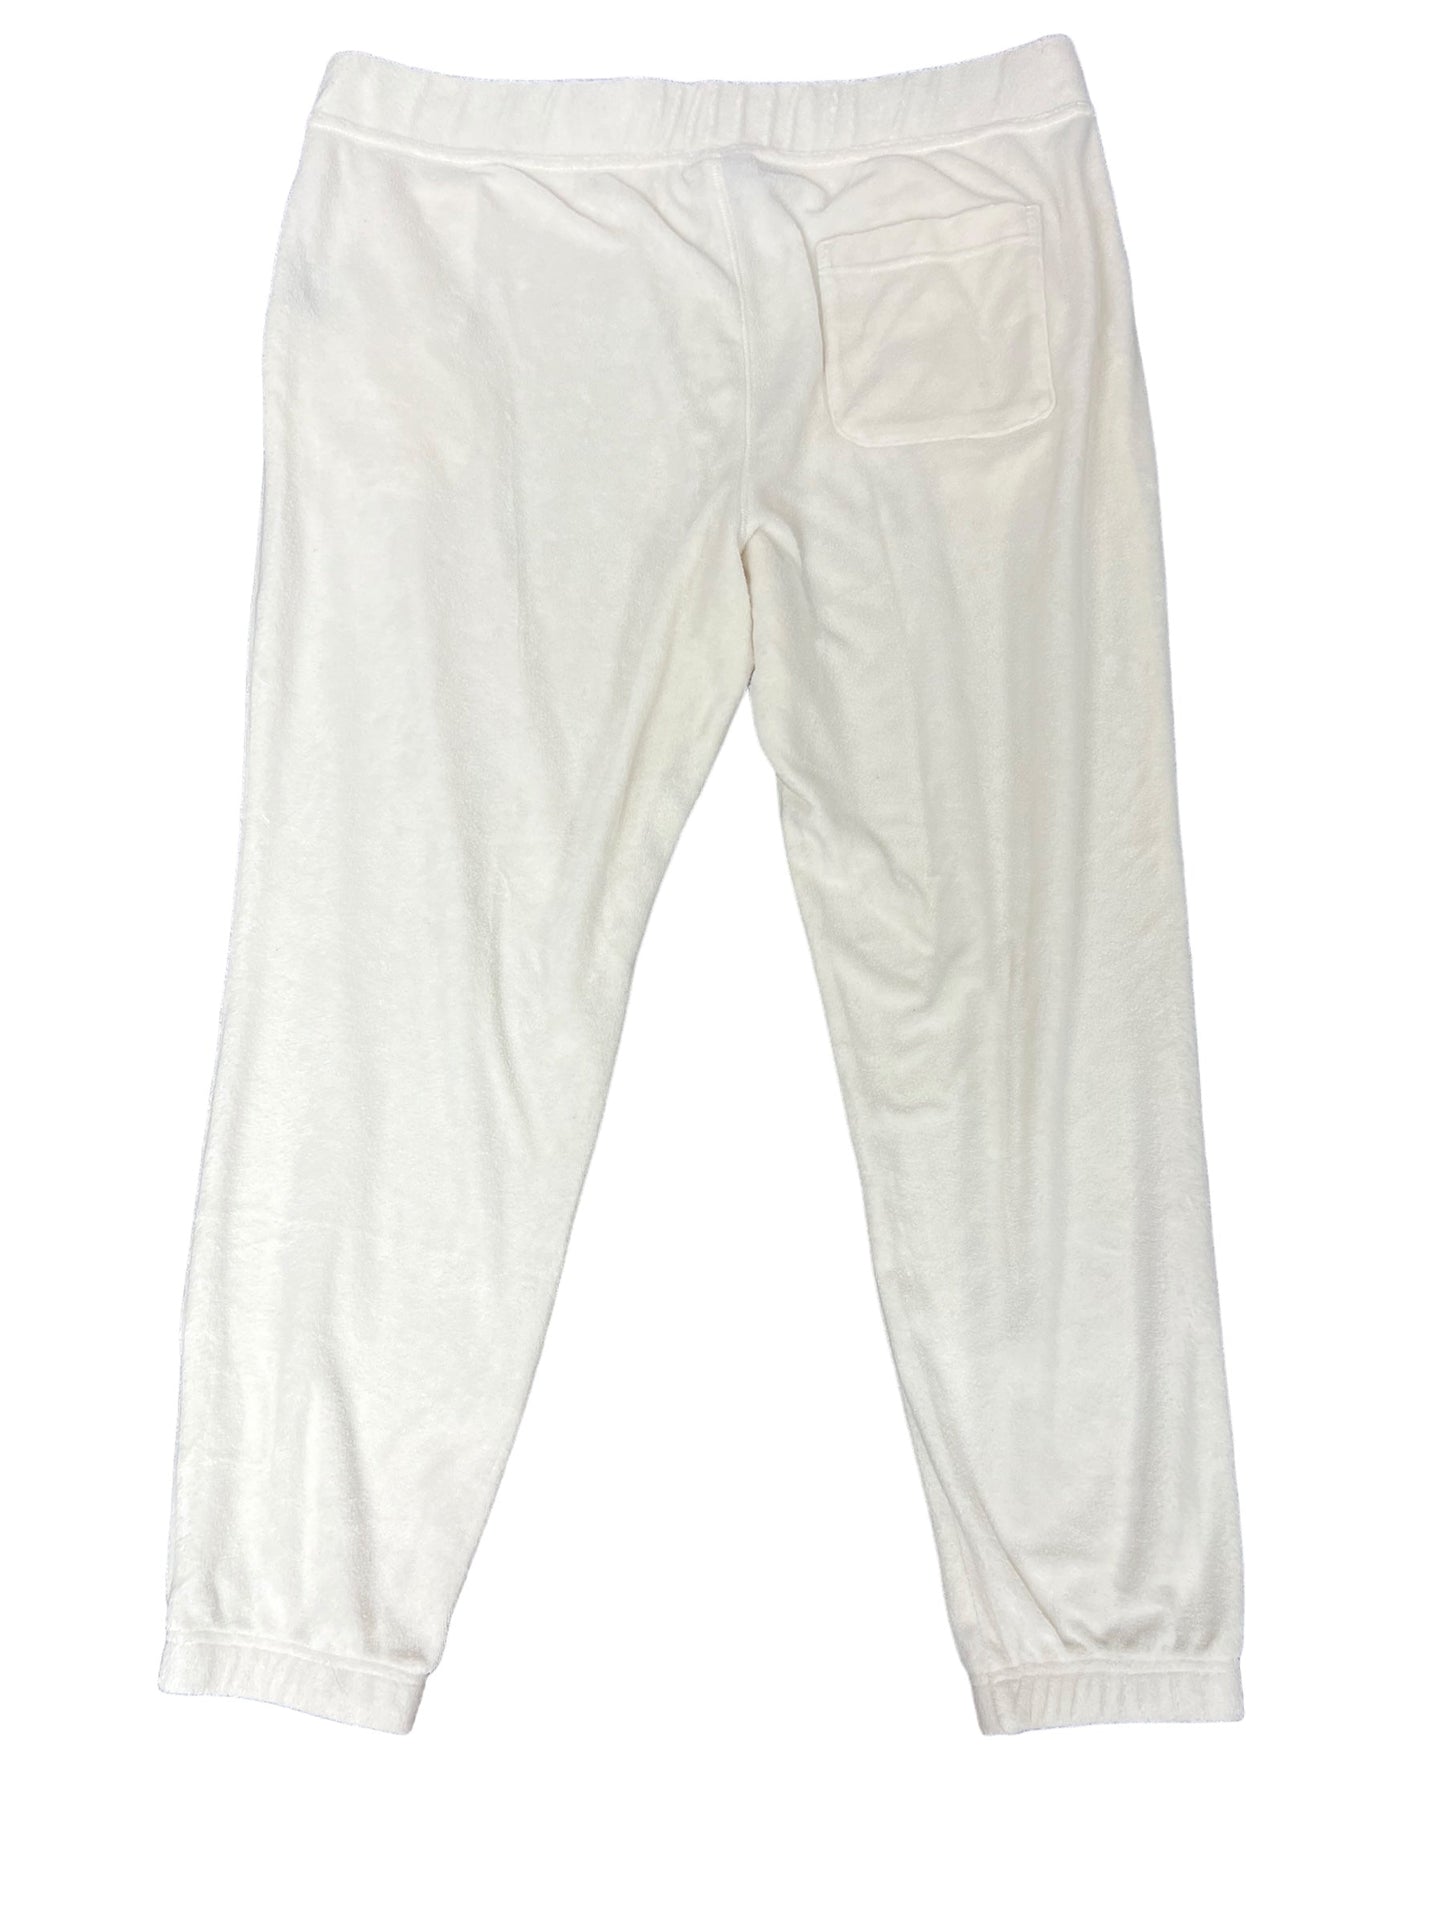 White Pants Joggers Ugg, Size Xxl